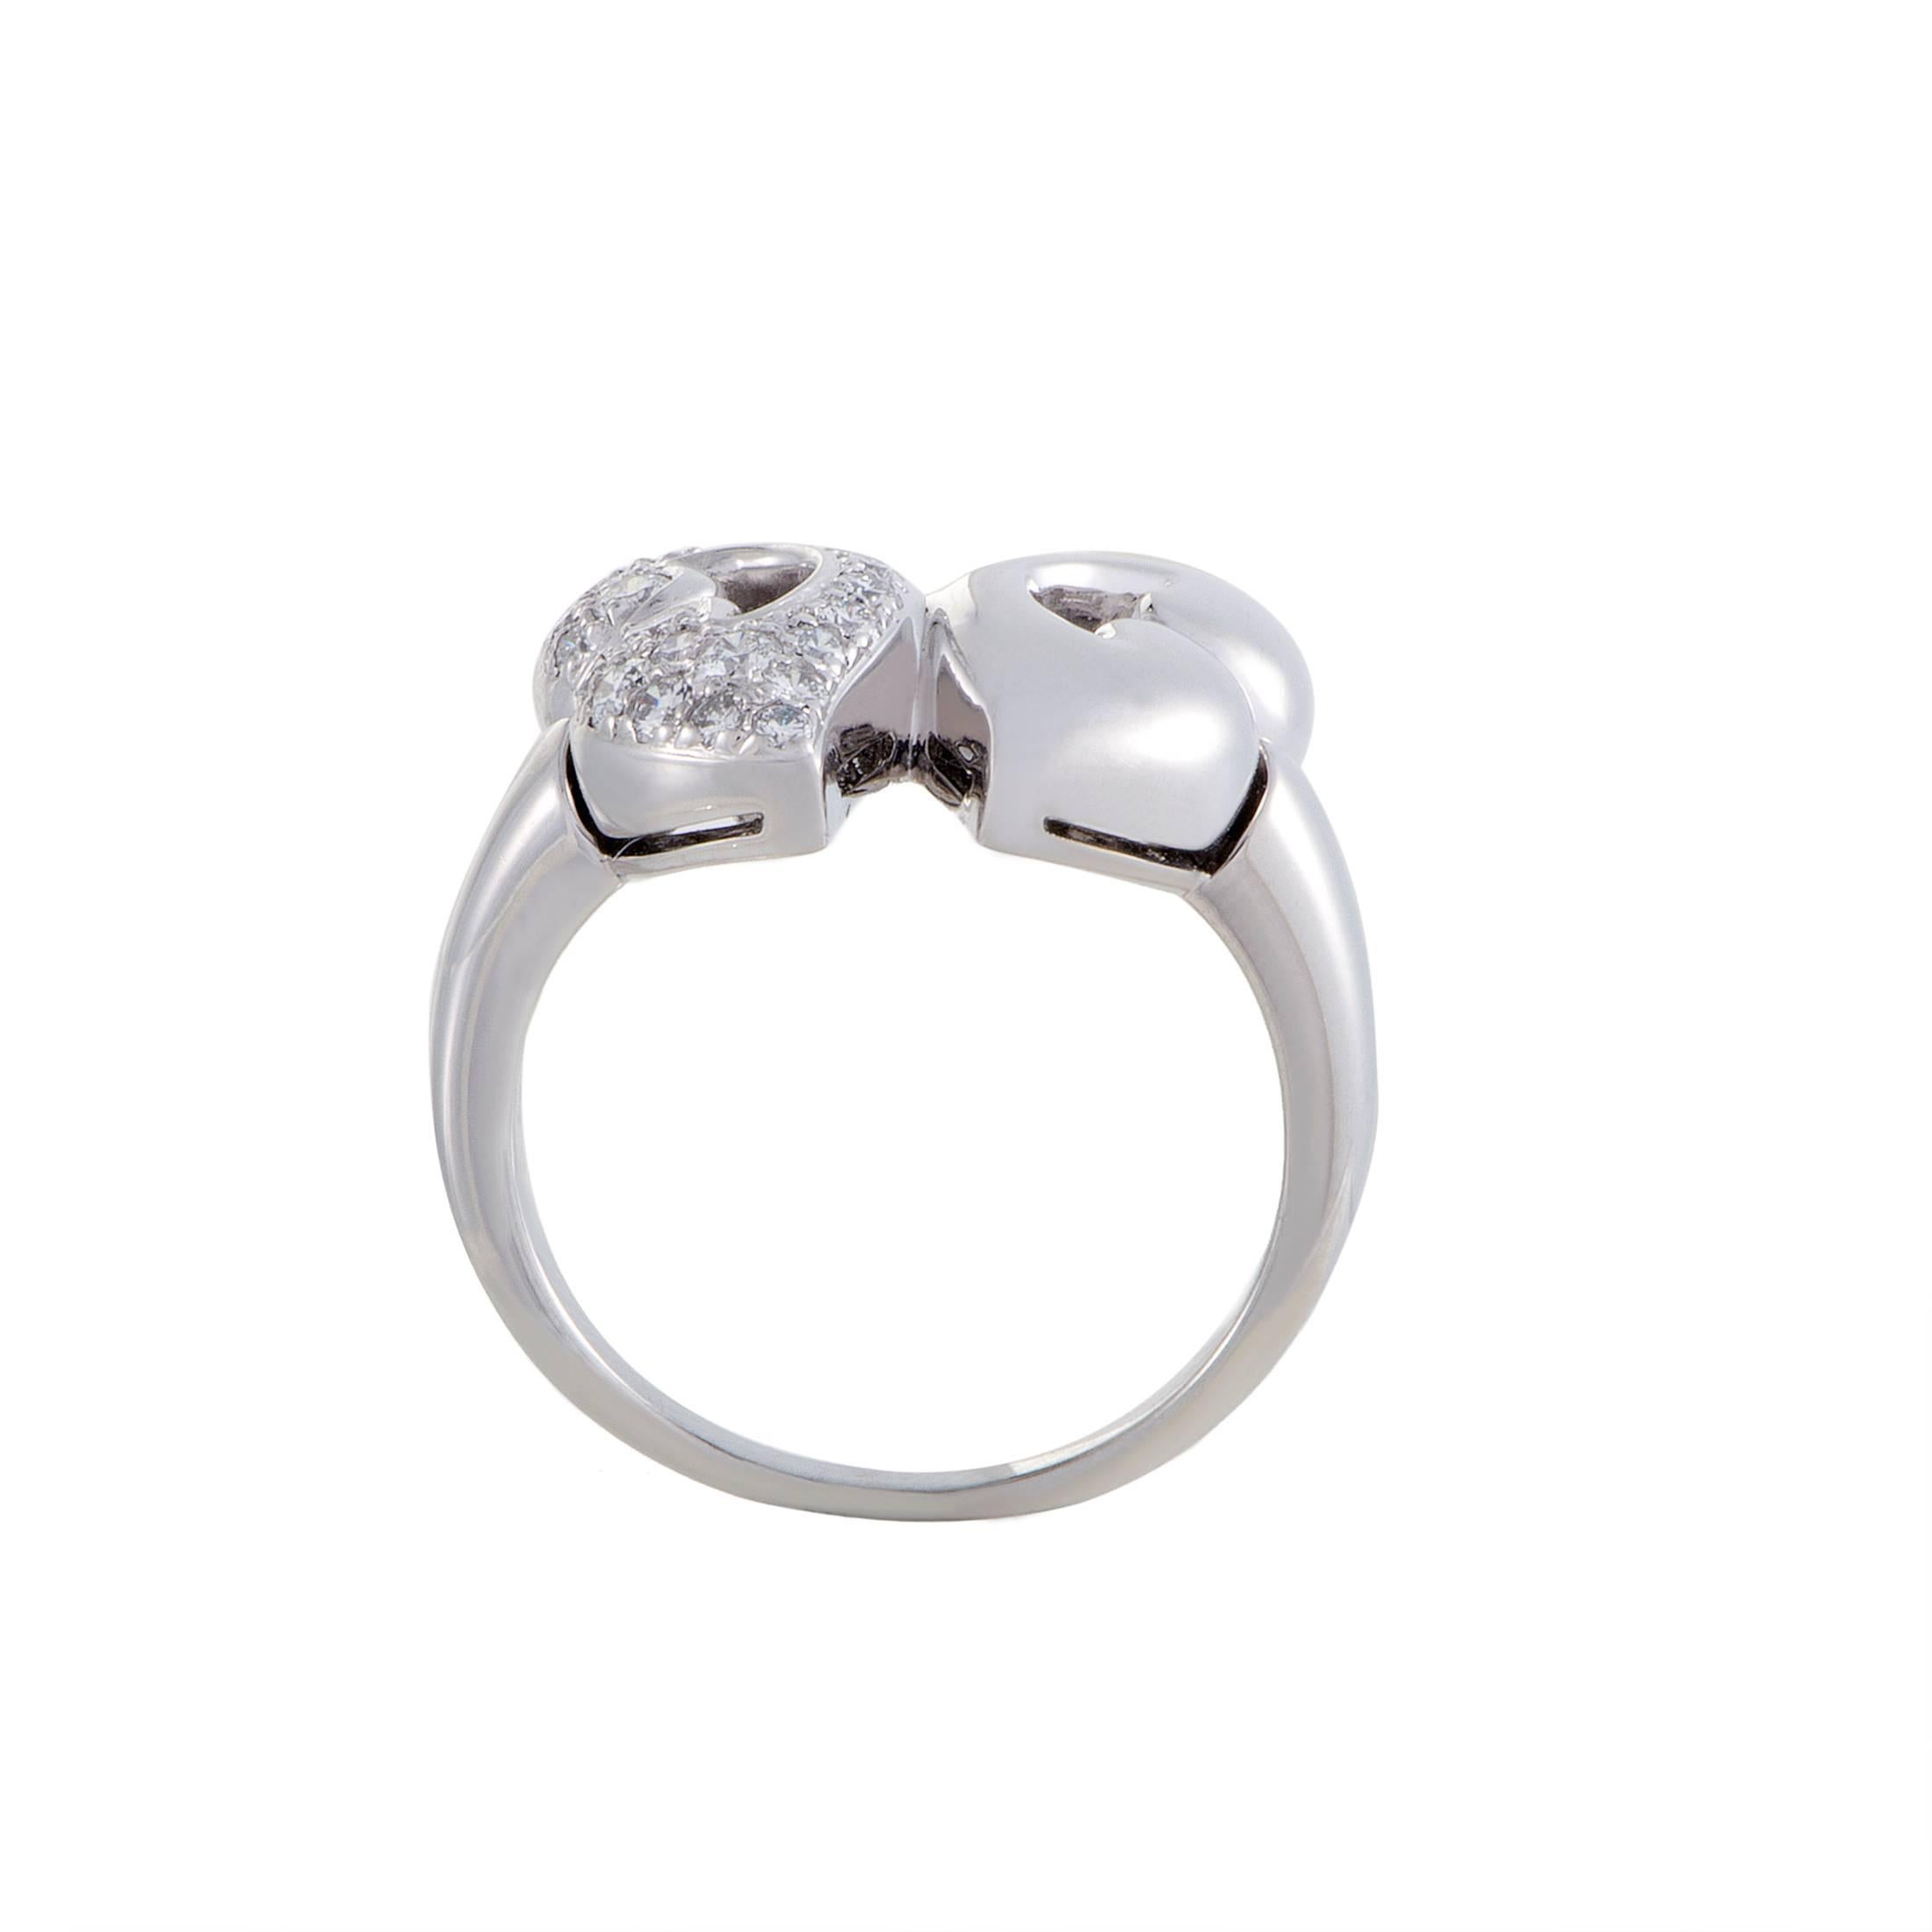 Bvlgari Nuvole Womens Platinum Diamond Pave Ring

This beautiful and unique ring from Bvlgari's 